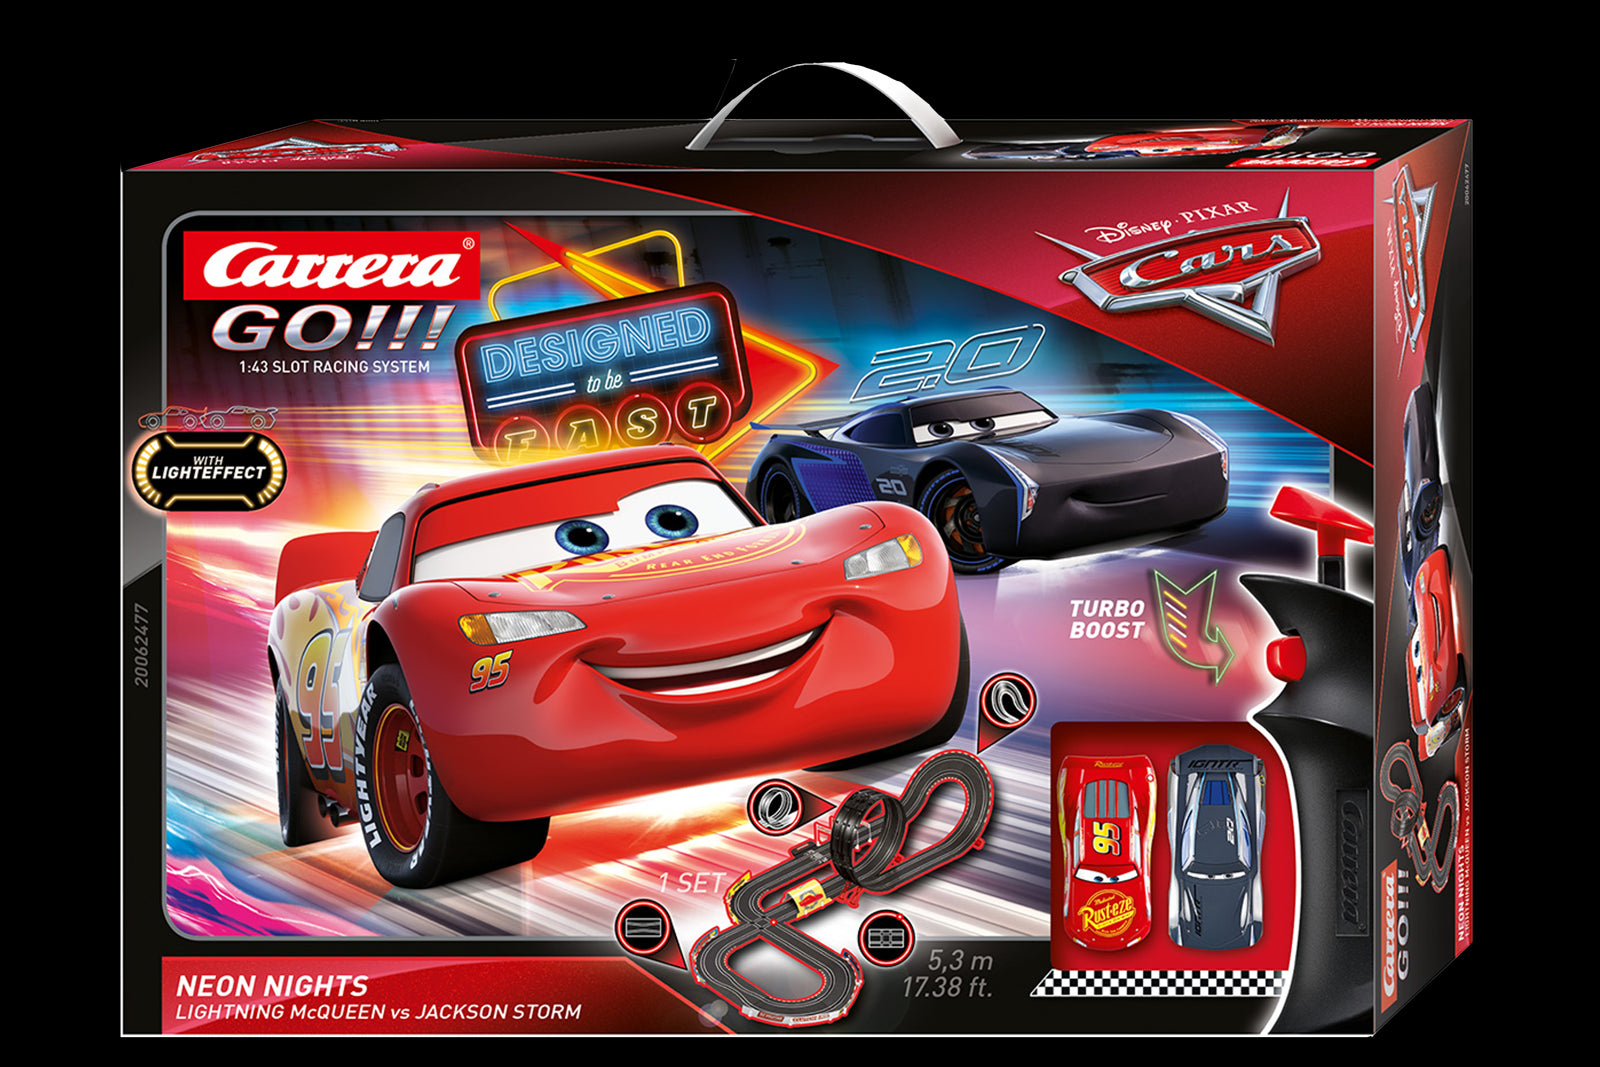 Circuit Carrera GO!!! Disney Pixar Cars Neon Nights